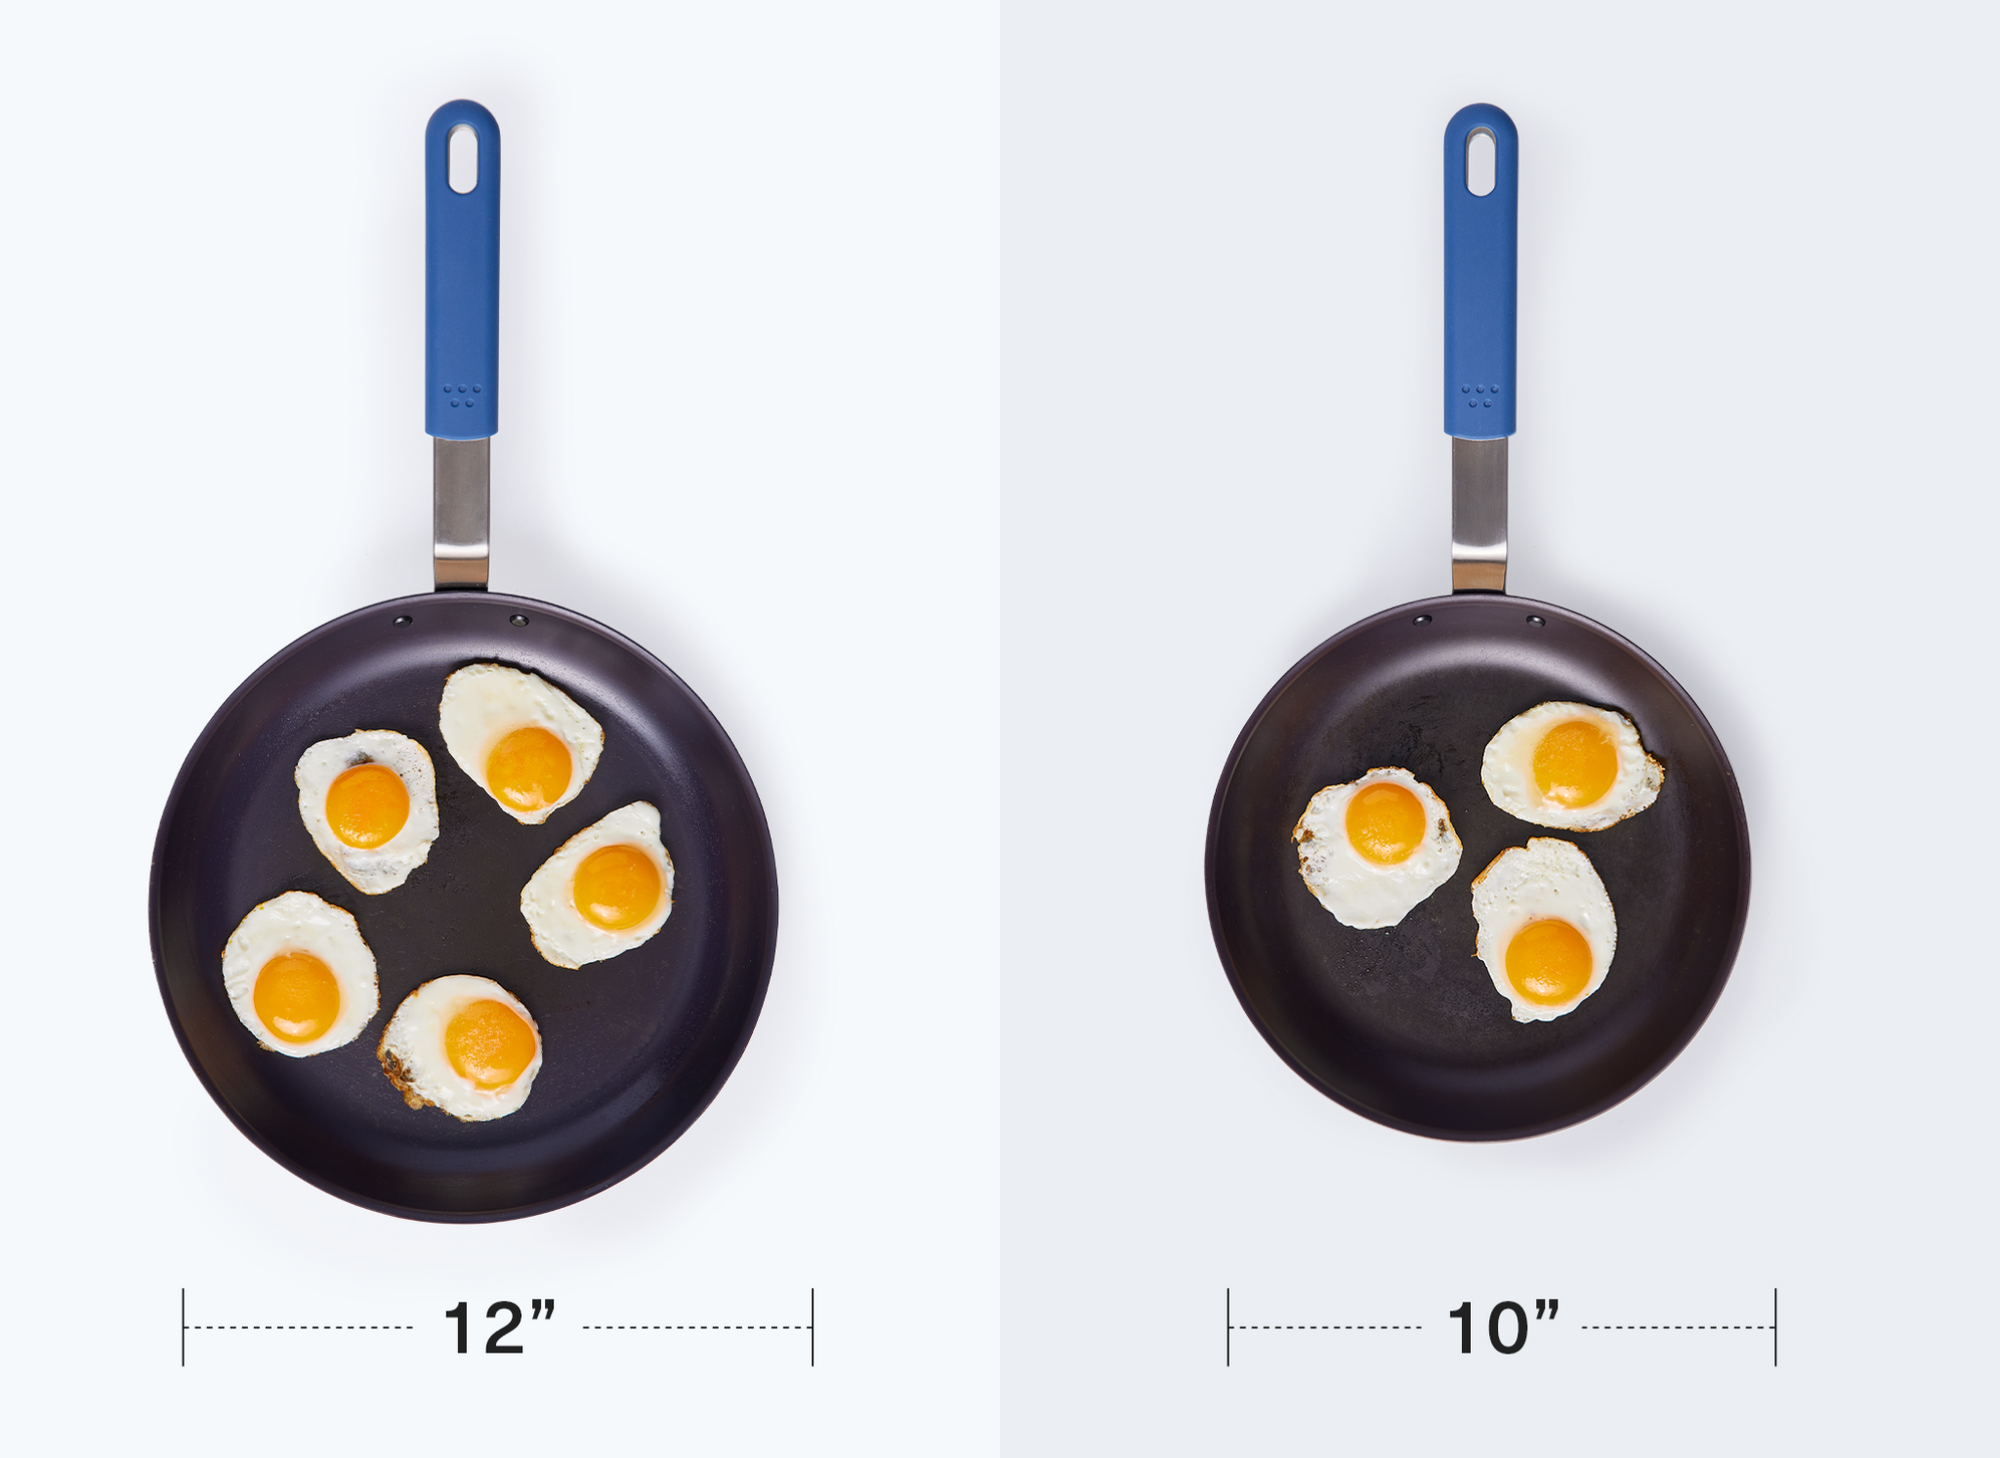 A 12 inch Misen Pre-Seasoned Carbon Steel Pan can fit five eggs while a 10 inch Misen Pre-Seasoned Carbon Steel Pan can fit three eggs.